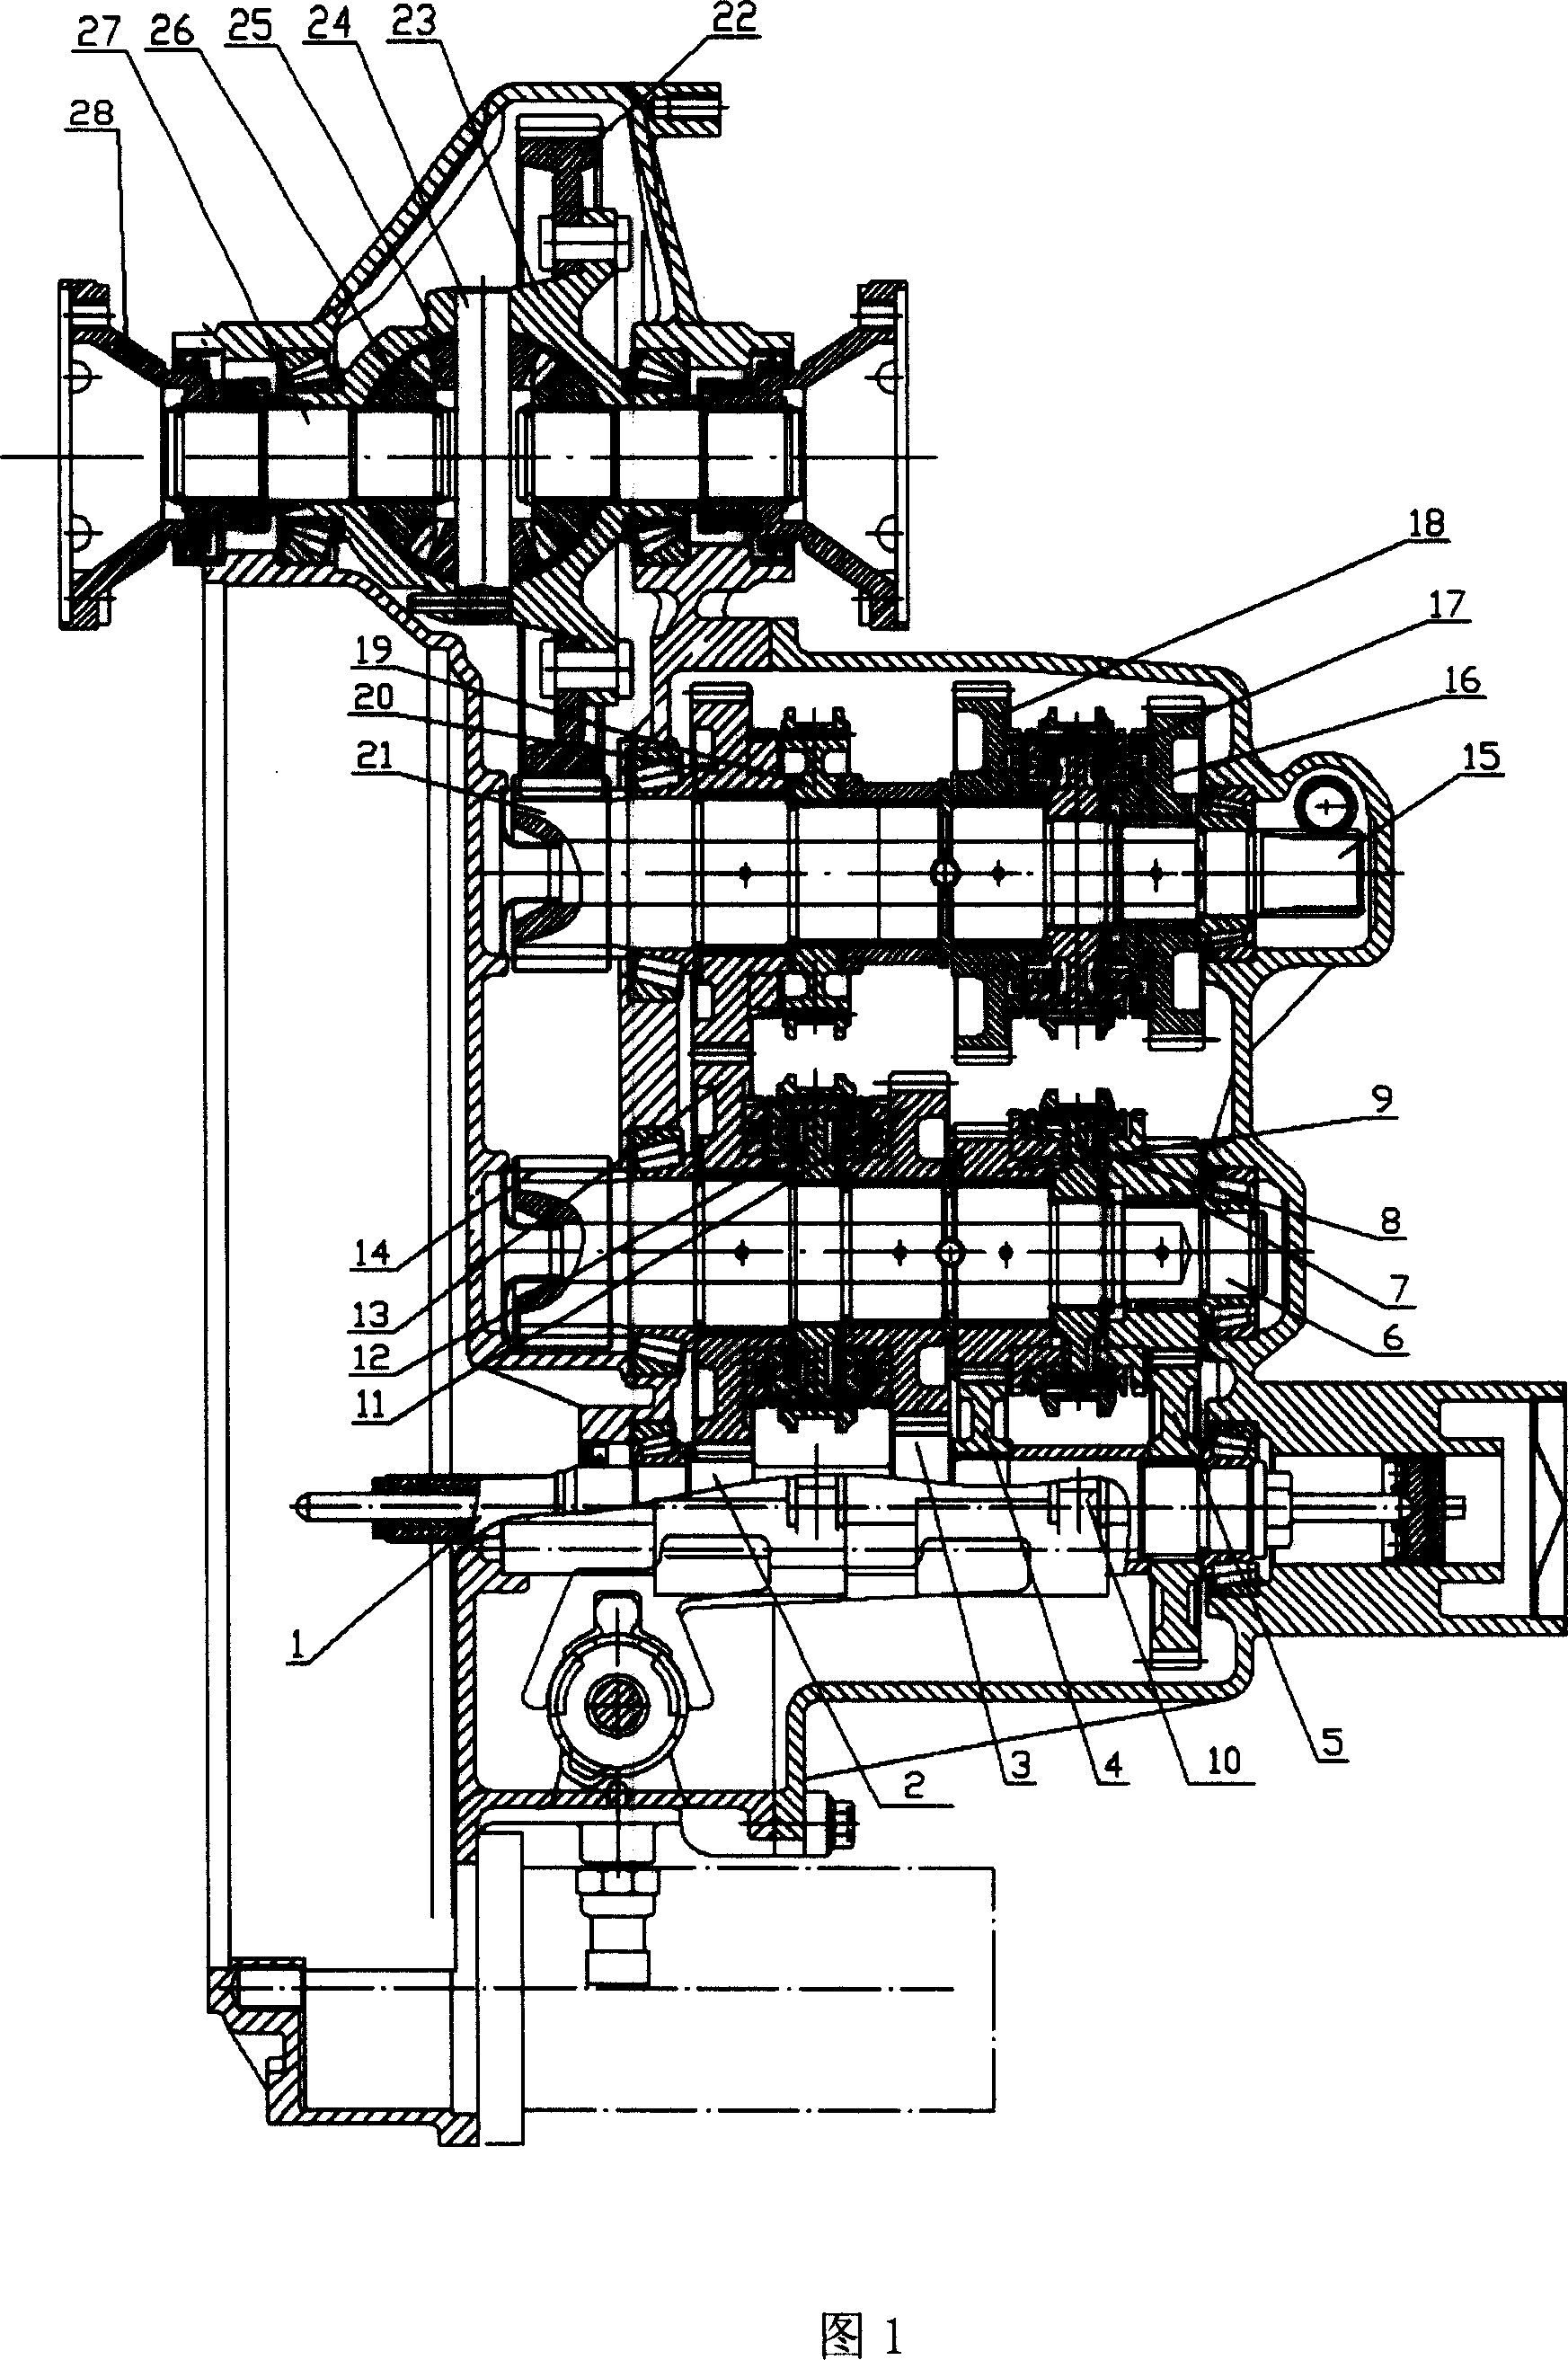 Six-speed mechanical saloon car transmission